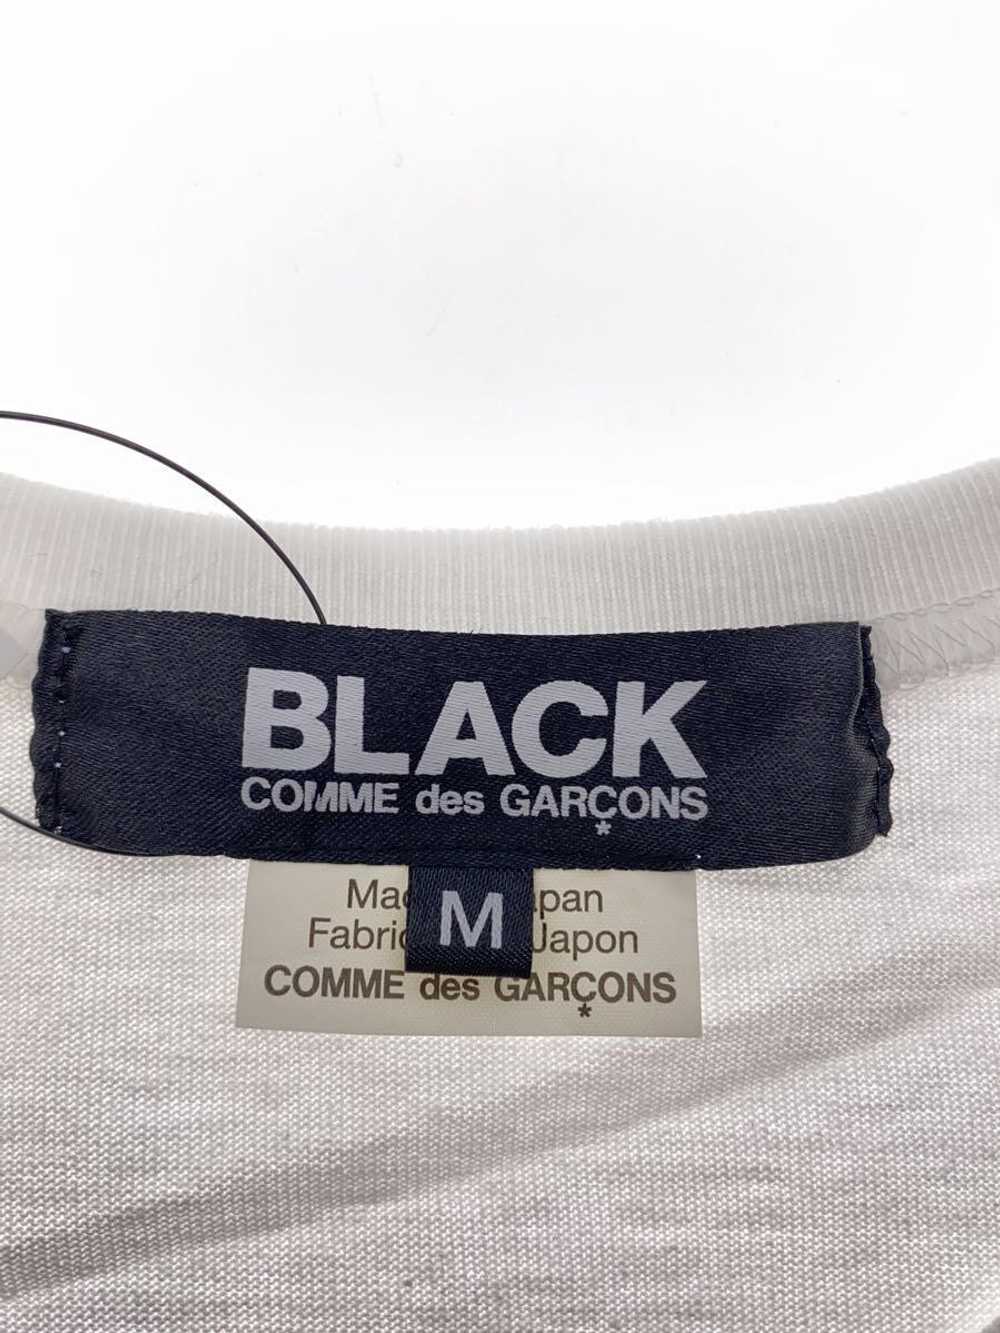 Used Black Comme Des Garcons Filip Pagowski/T-Shi… - image 3